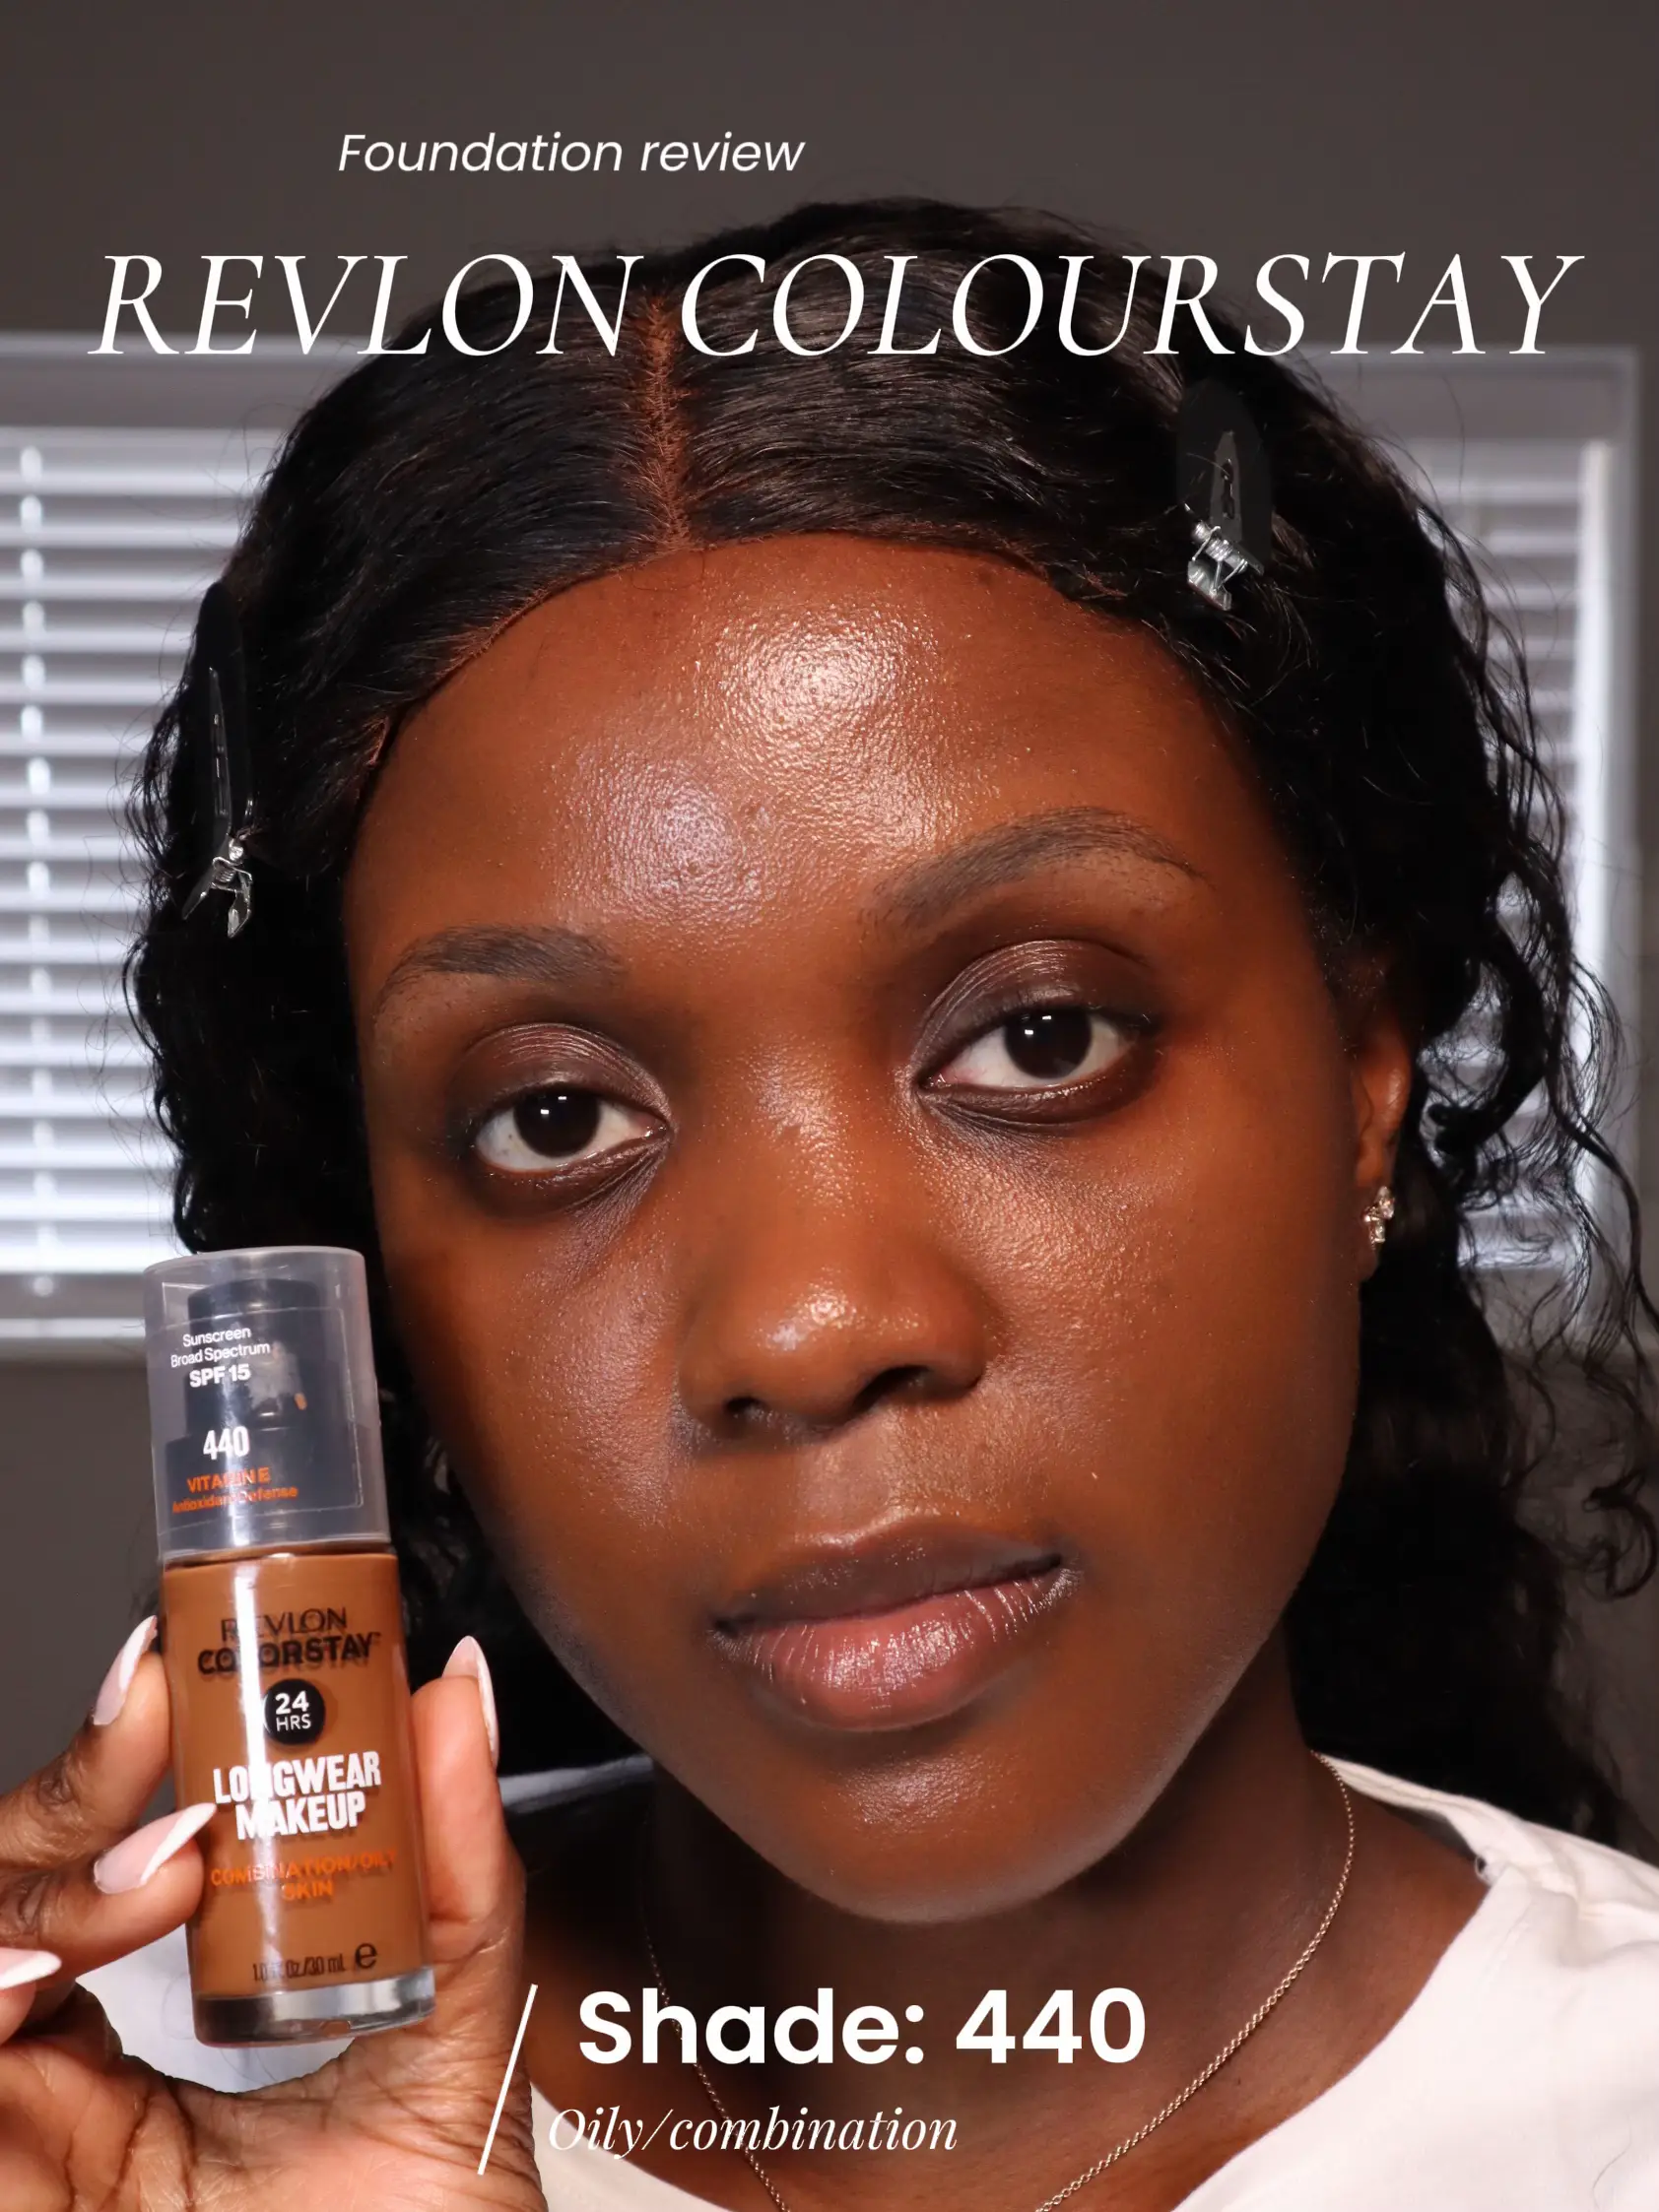 Revlon Colourstay Foundation Review